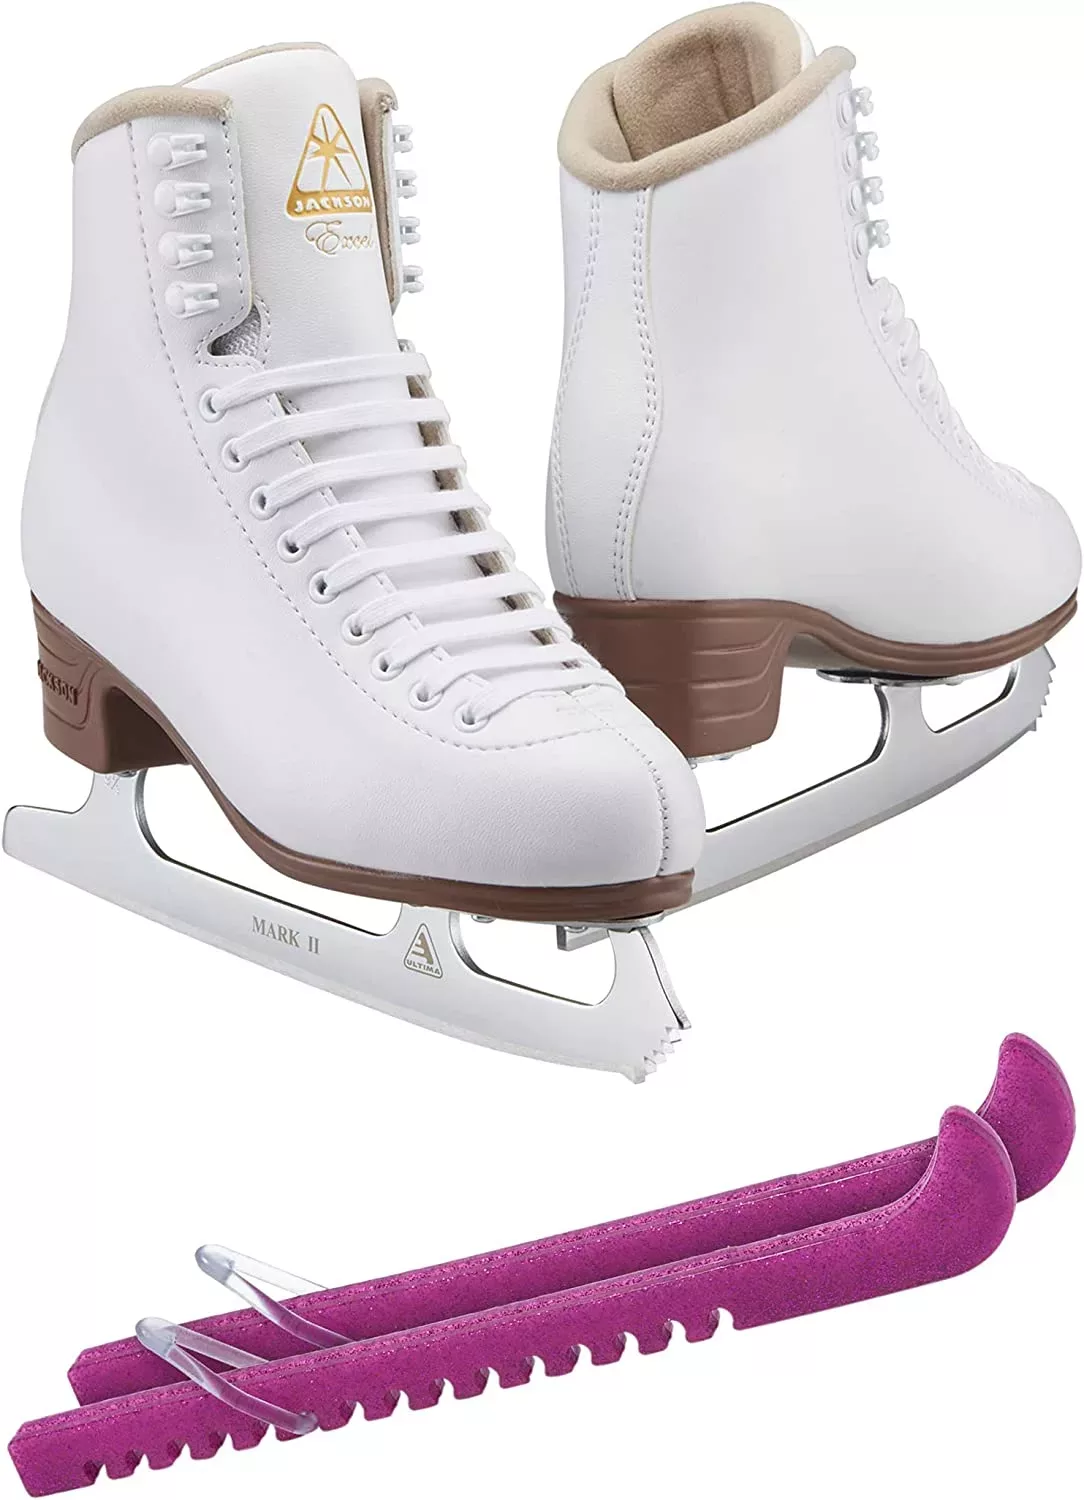 SKATE GURU Jackson Ultima Eiskunstlaufschuhe Excel JS1290 Bundle mit Guardog Skate Guards Bündel